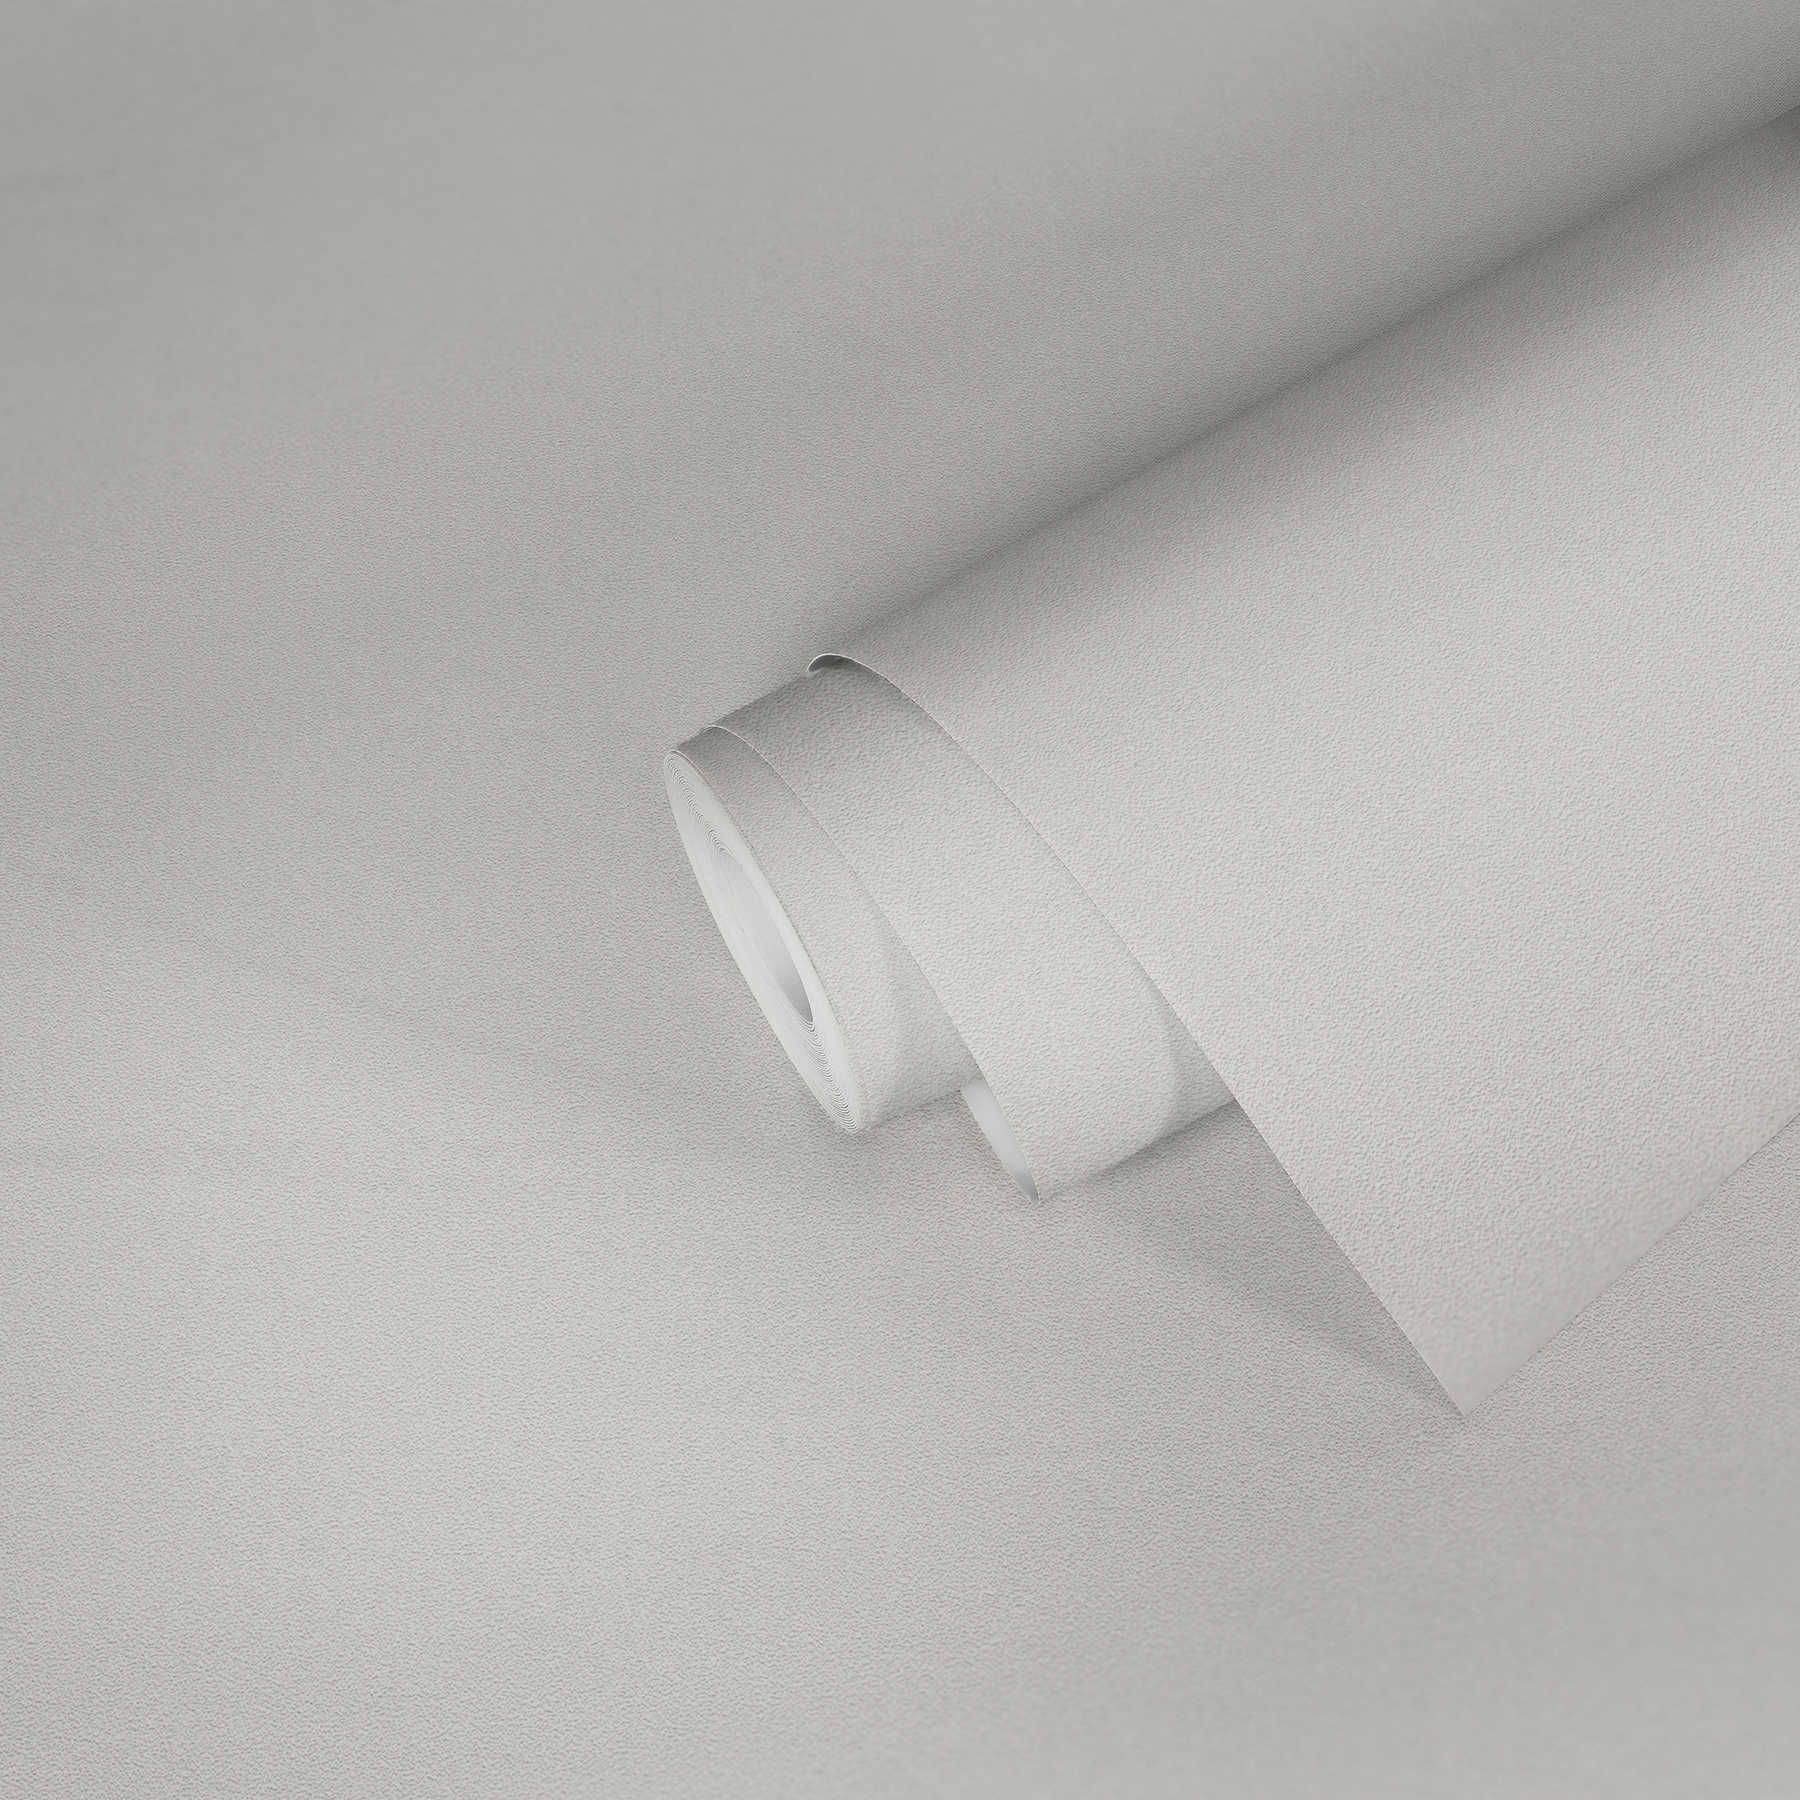             Carta da parati neutra in tessuto non tessuto tinta unita, leggera e liscia - bianco
        